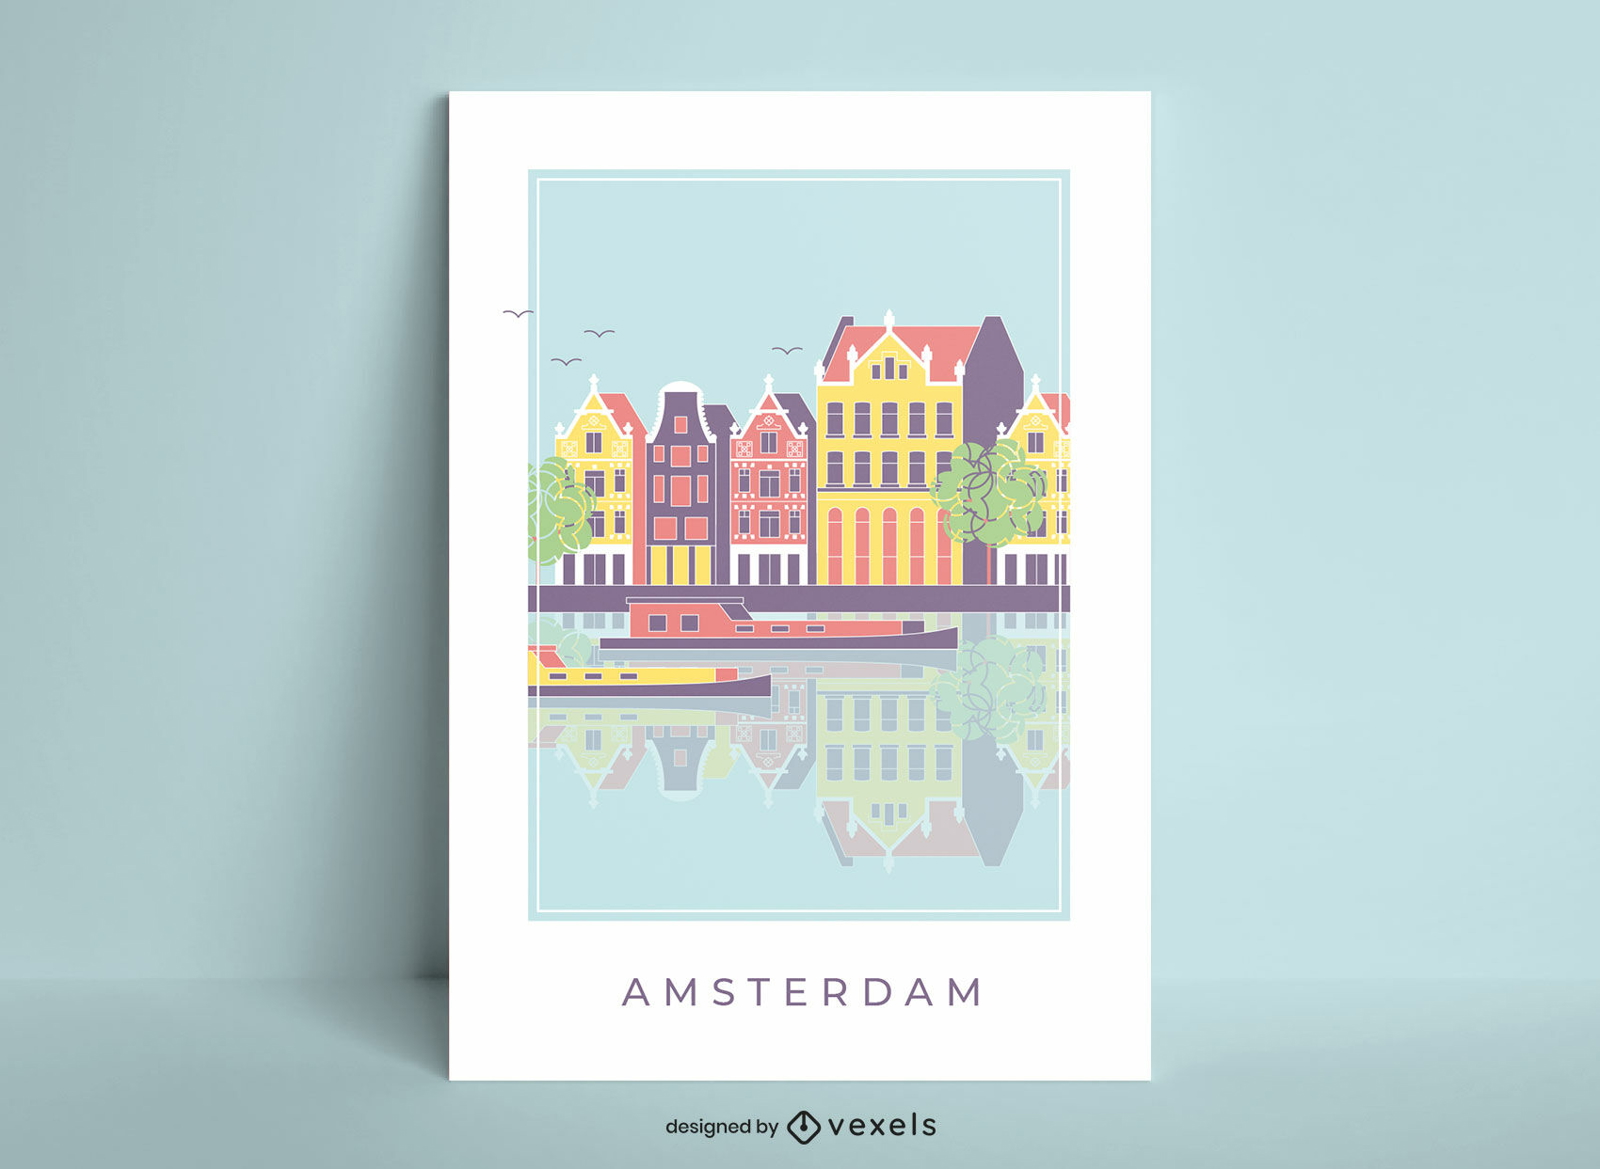 Amsterdam city landscape poster